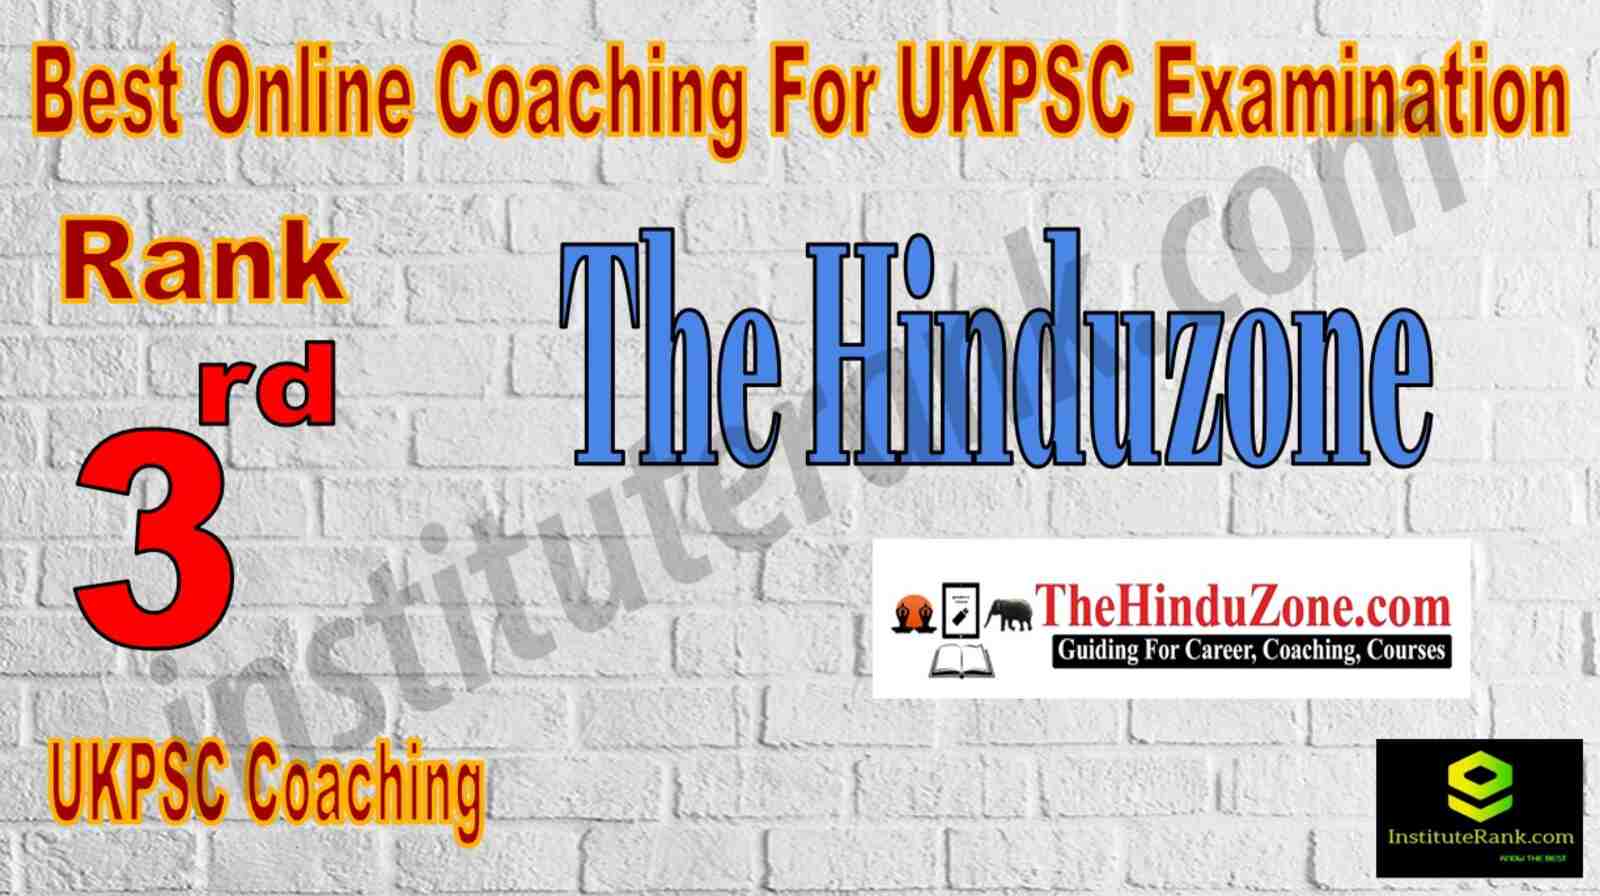 Rank 3. Best Online Coaching for the UKPSC Examination